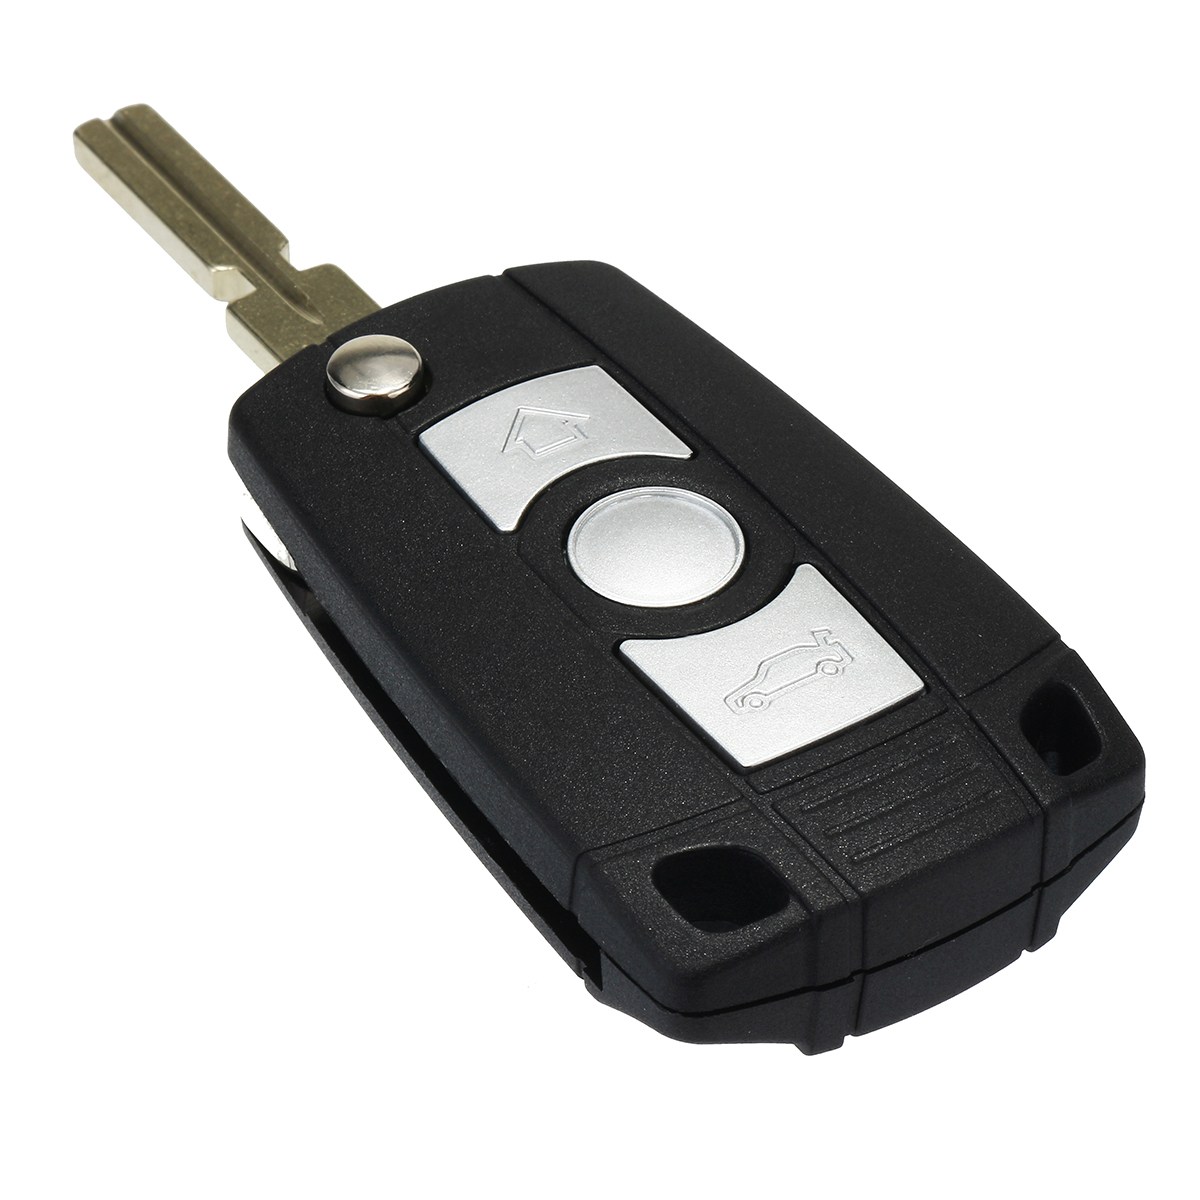 Folding Flip Car Remote Key Fob Case Shell for BMW 3 5 7 Series Z3 Z4 E38 E39 E46 X5